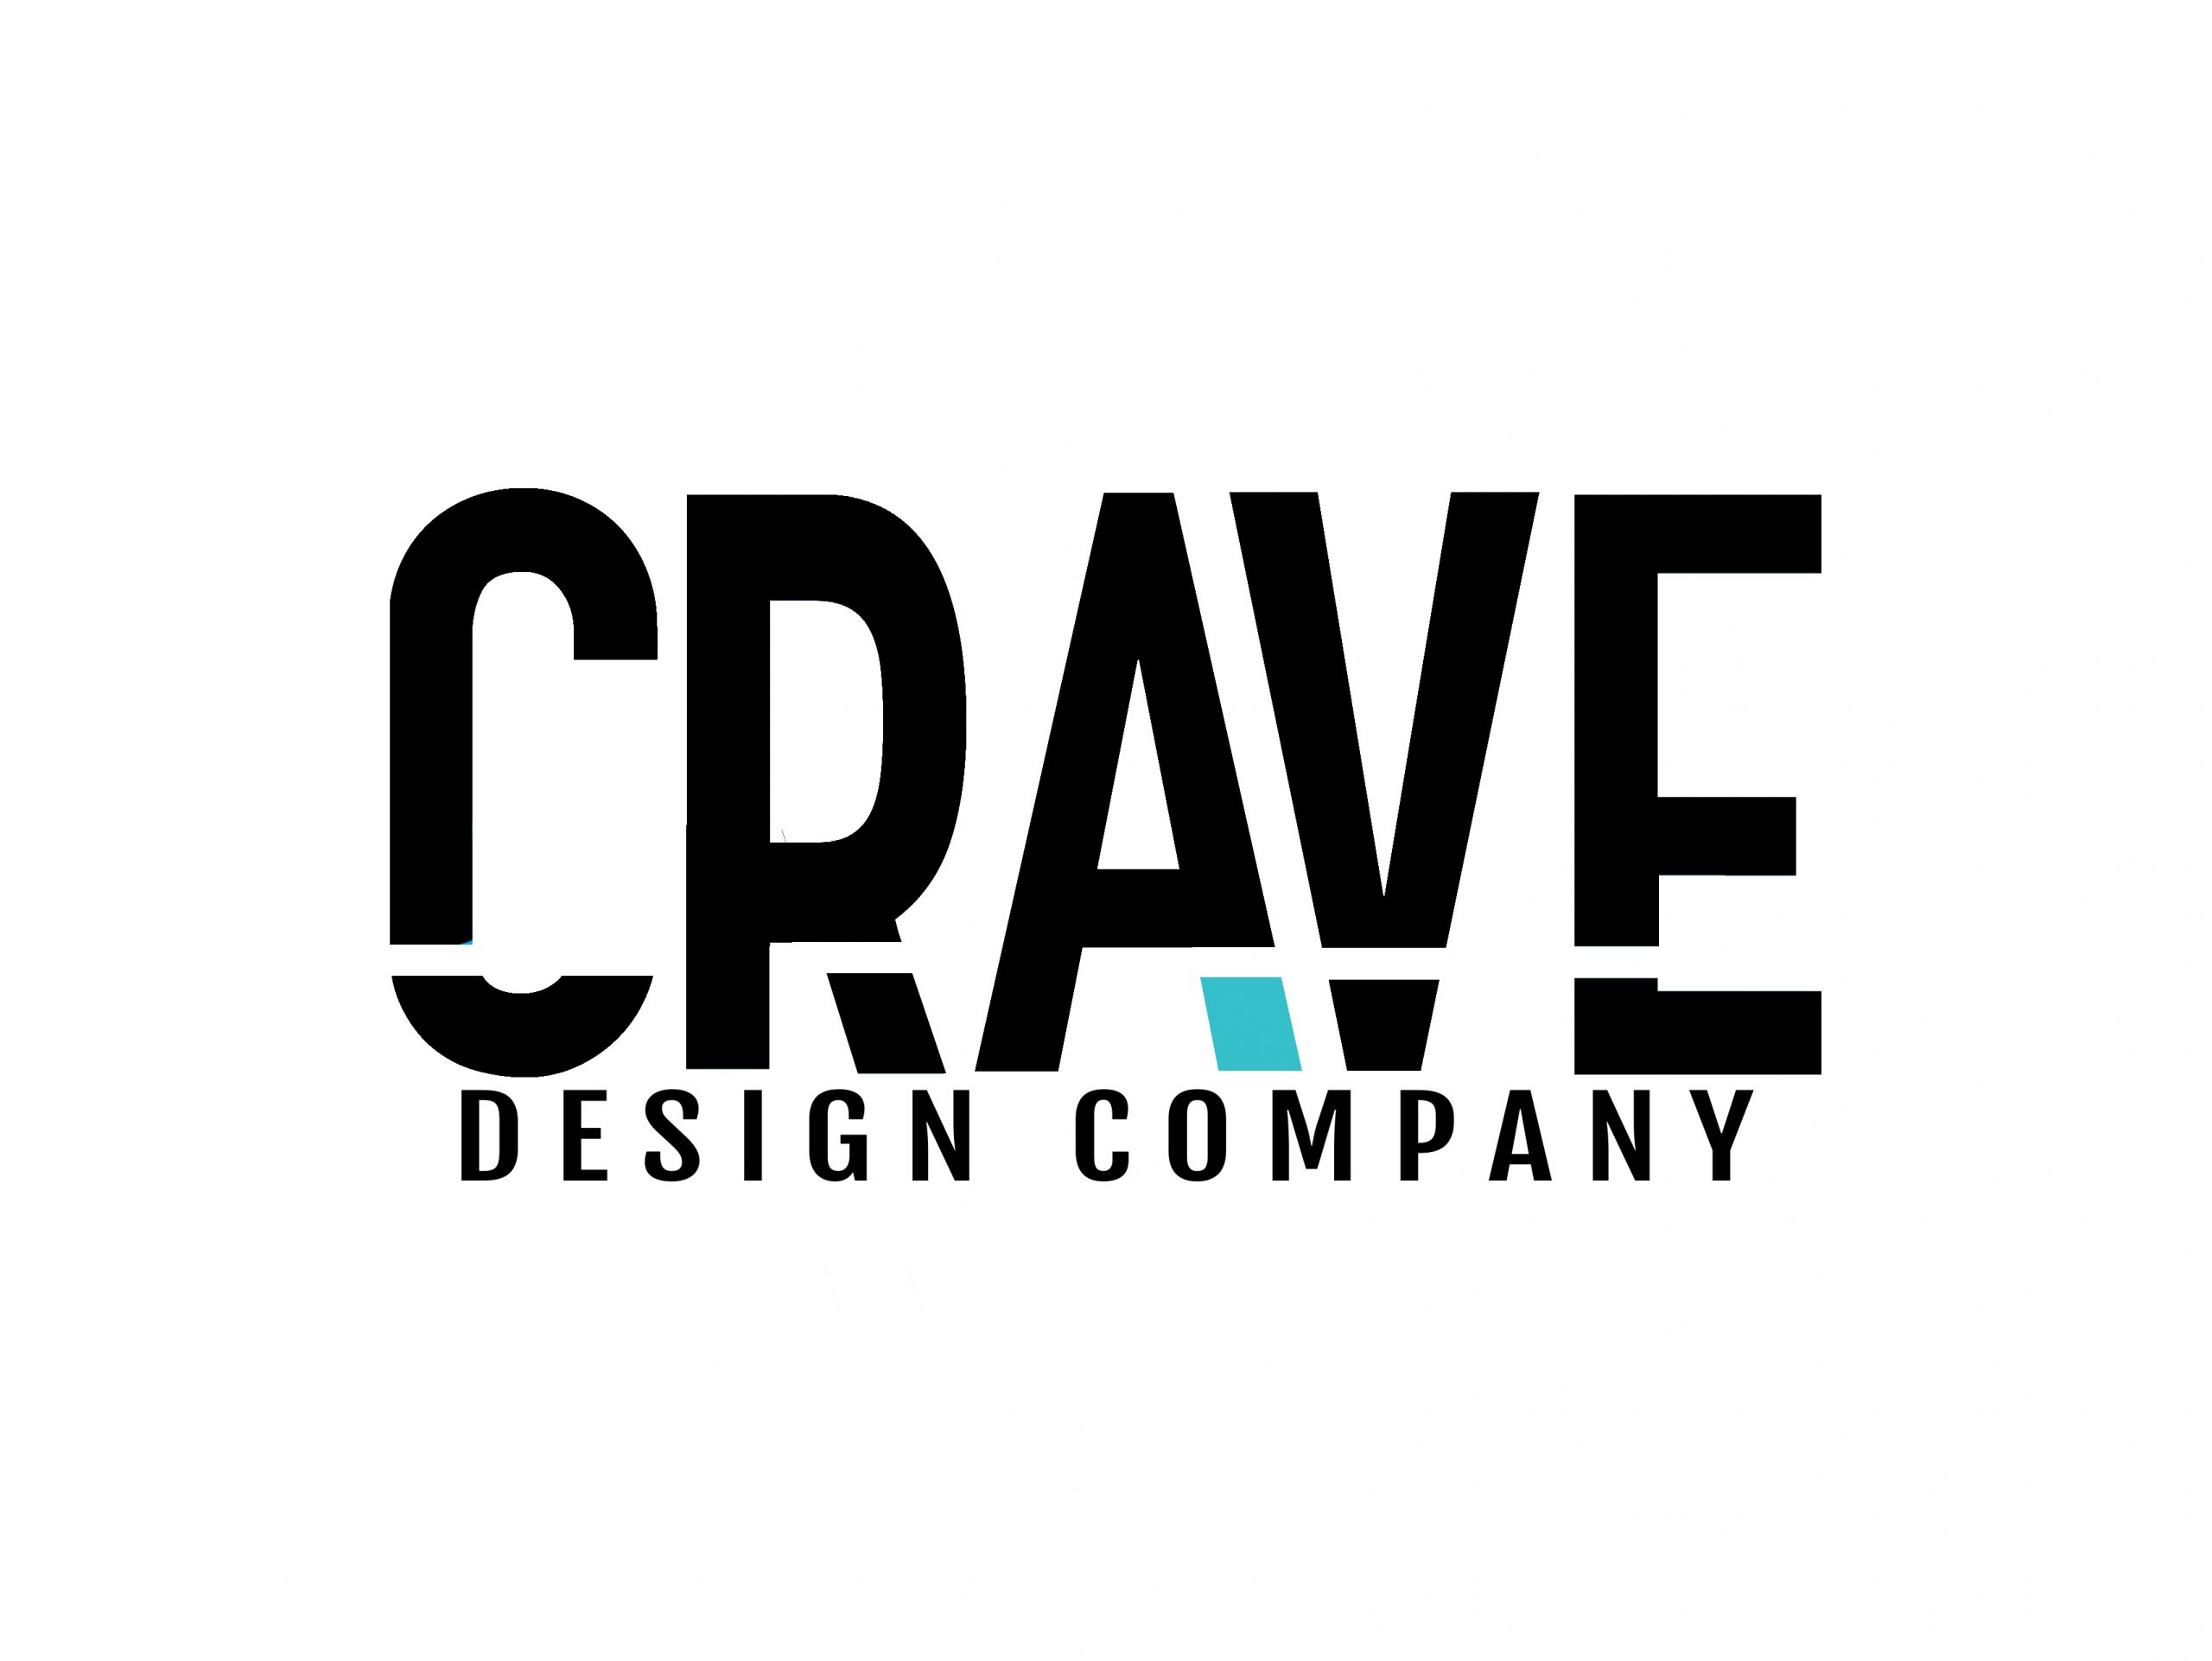 crave logo black (1)